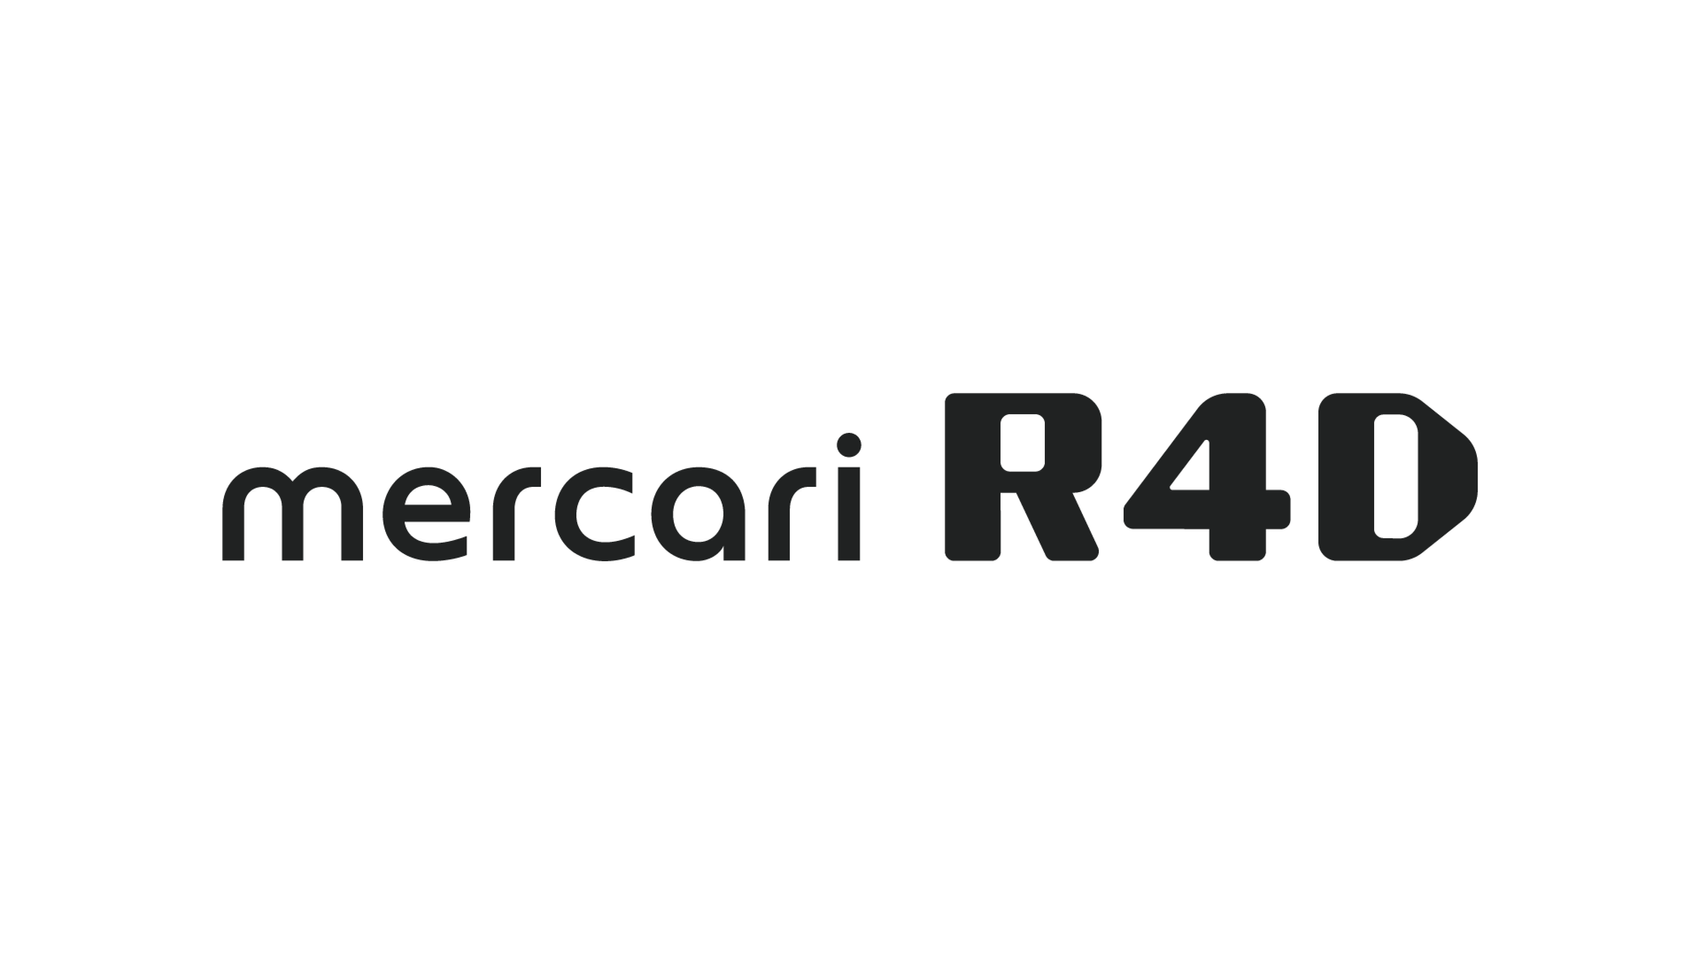 Mercari R4D HCI at JavaScriptum 7.0 & Kyrgyzstan BA Community Event